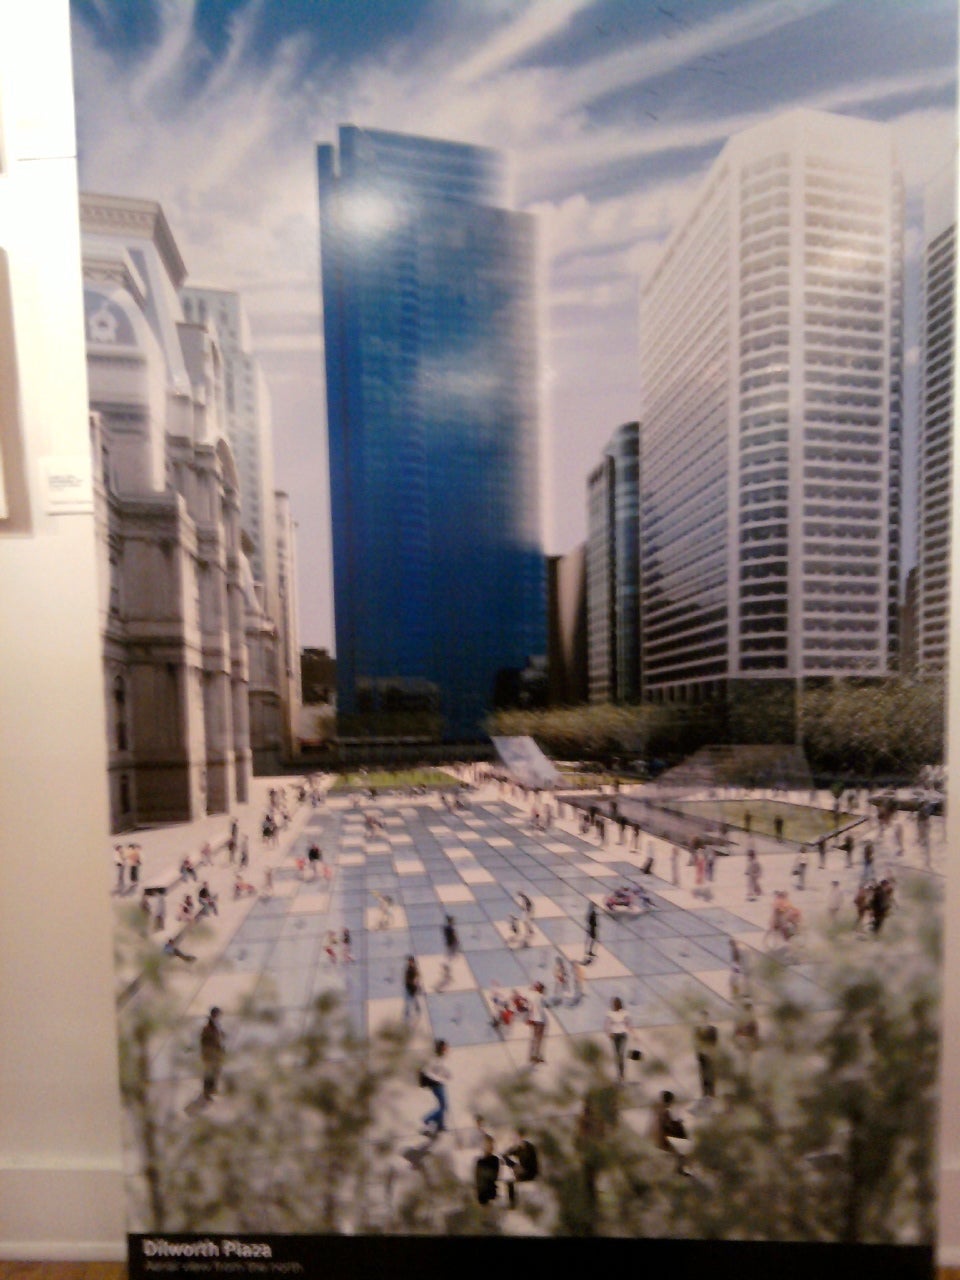 Proposed Dilworth Plaza public space